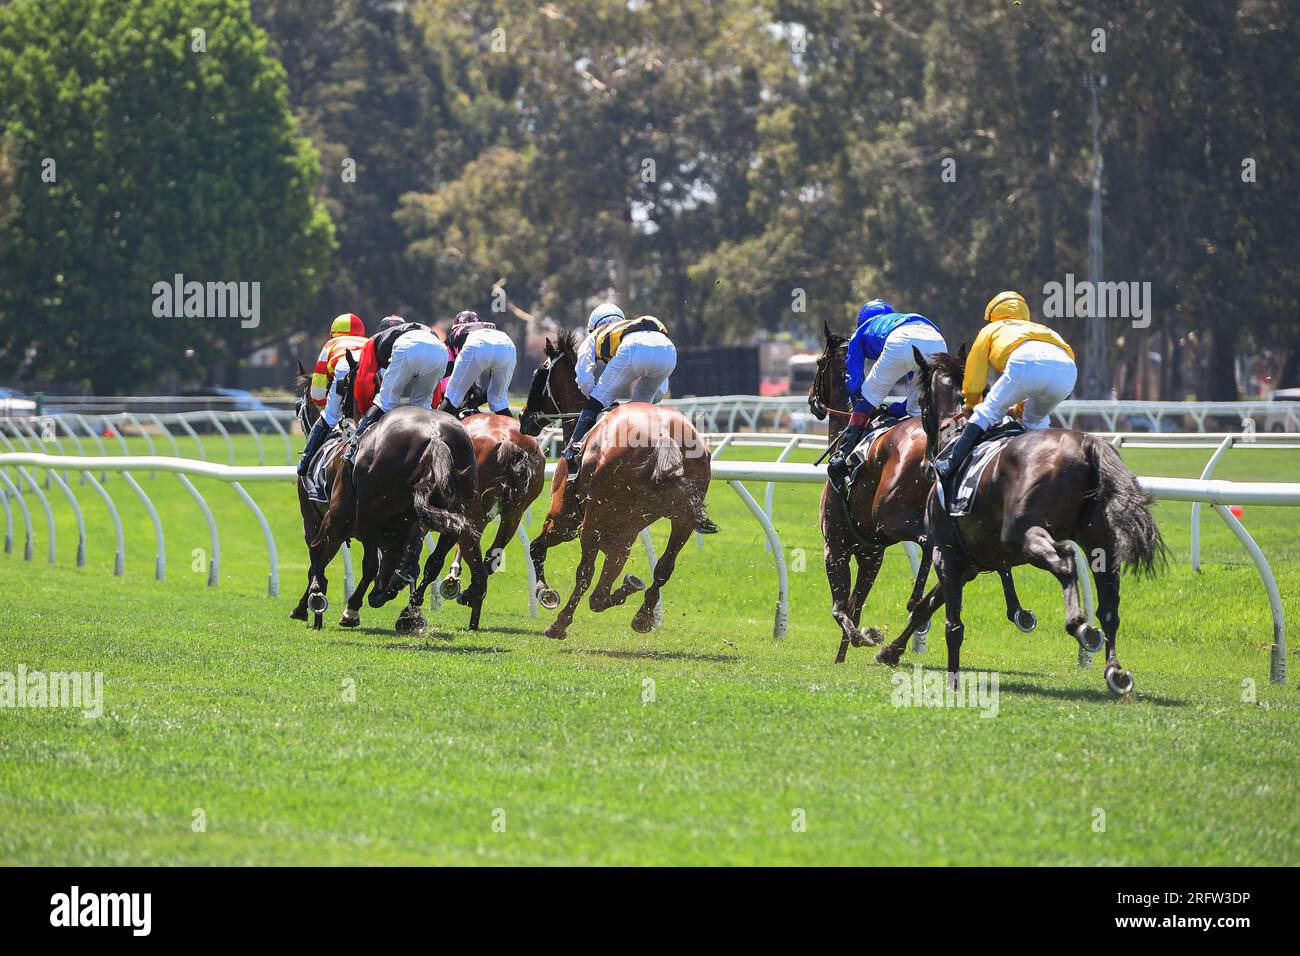 Horse racing in Australia. Horses with jockeys running towards finish line. Stock Photo